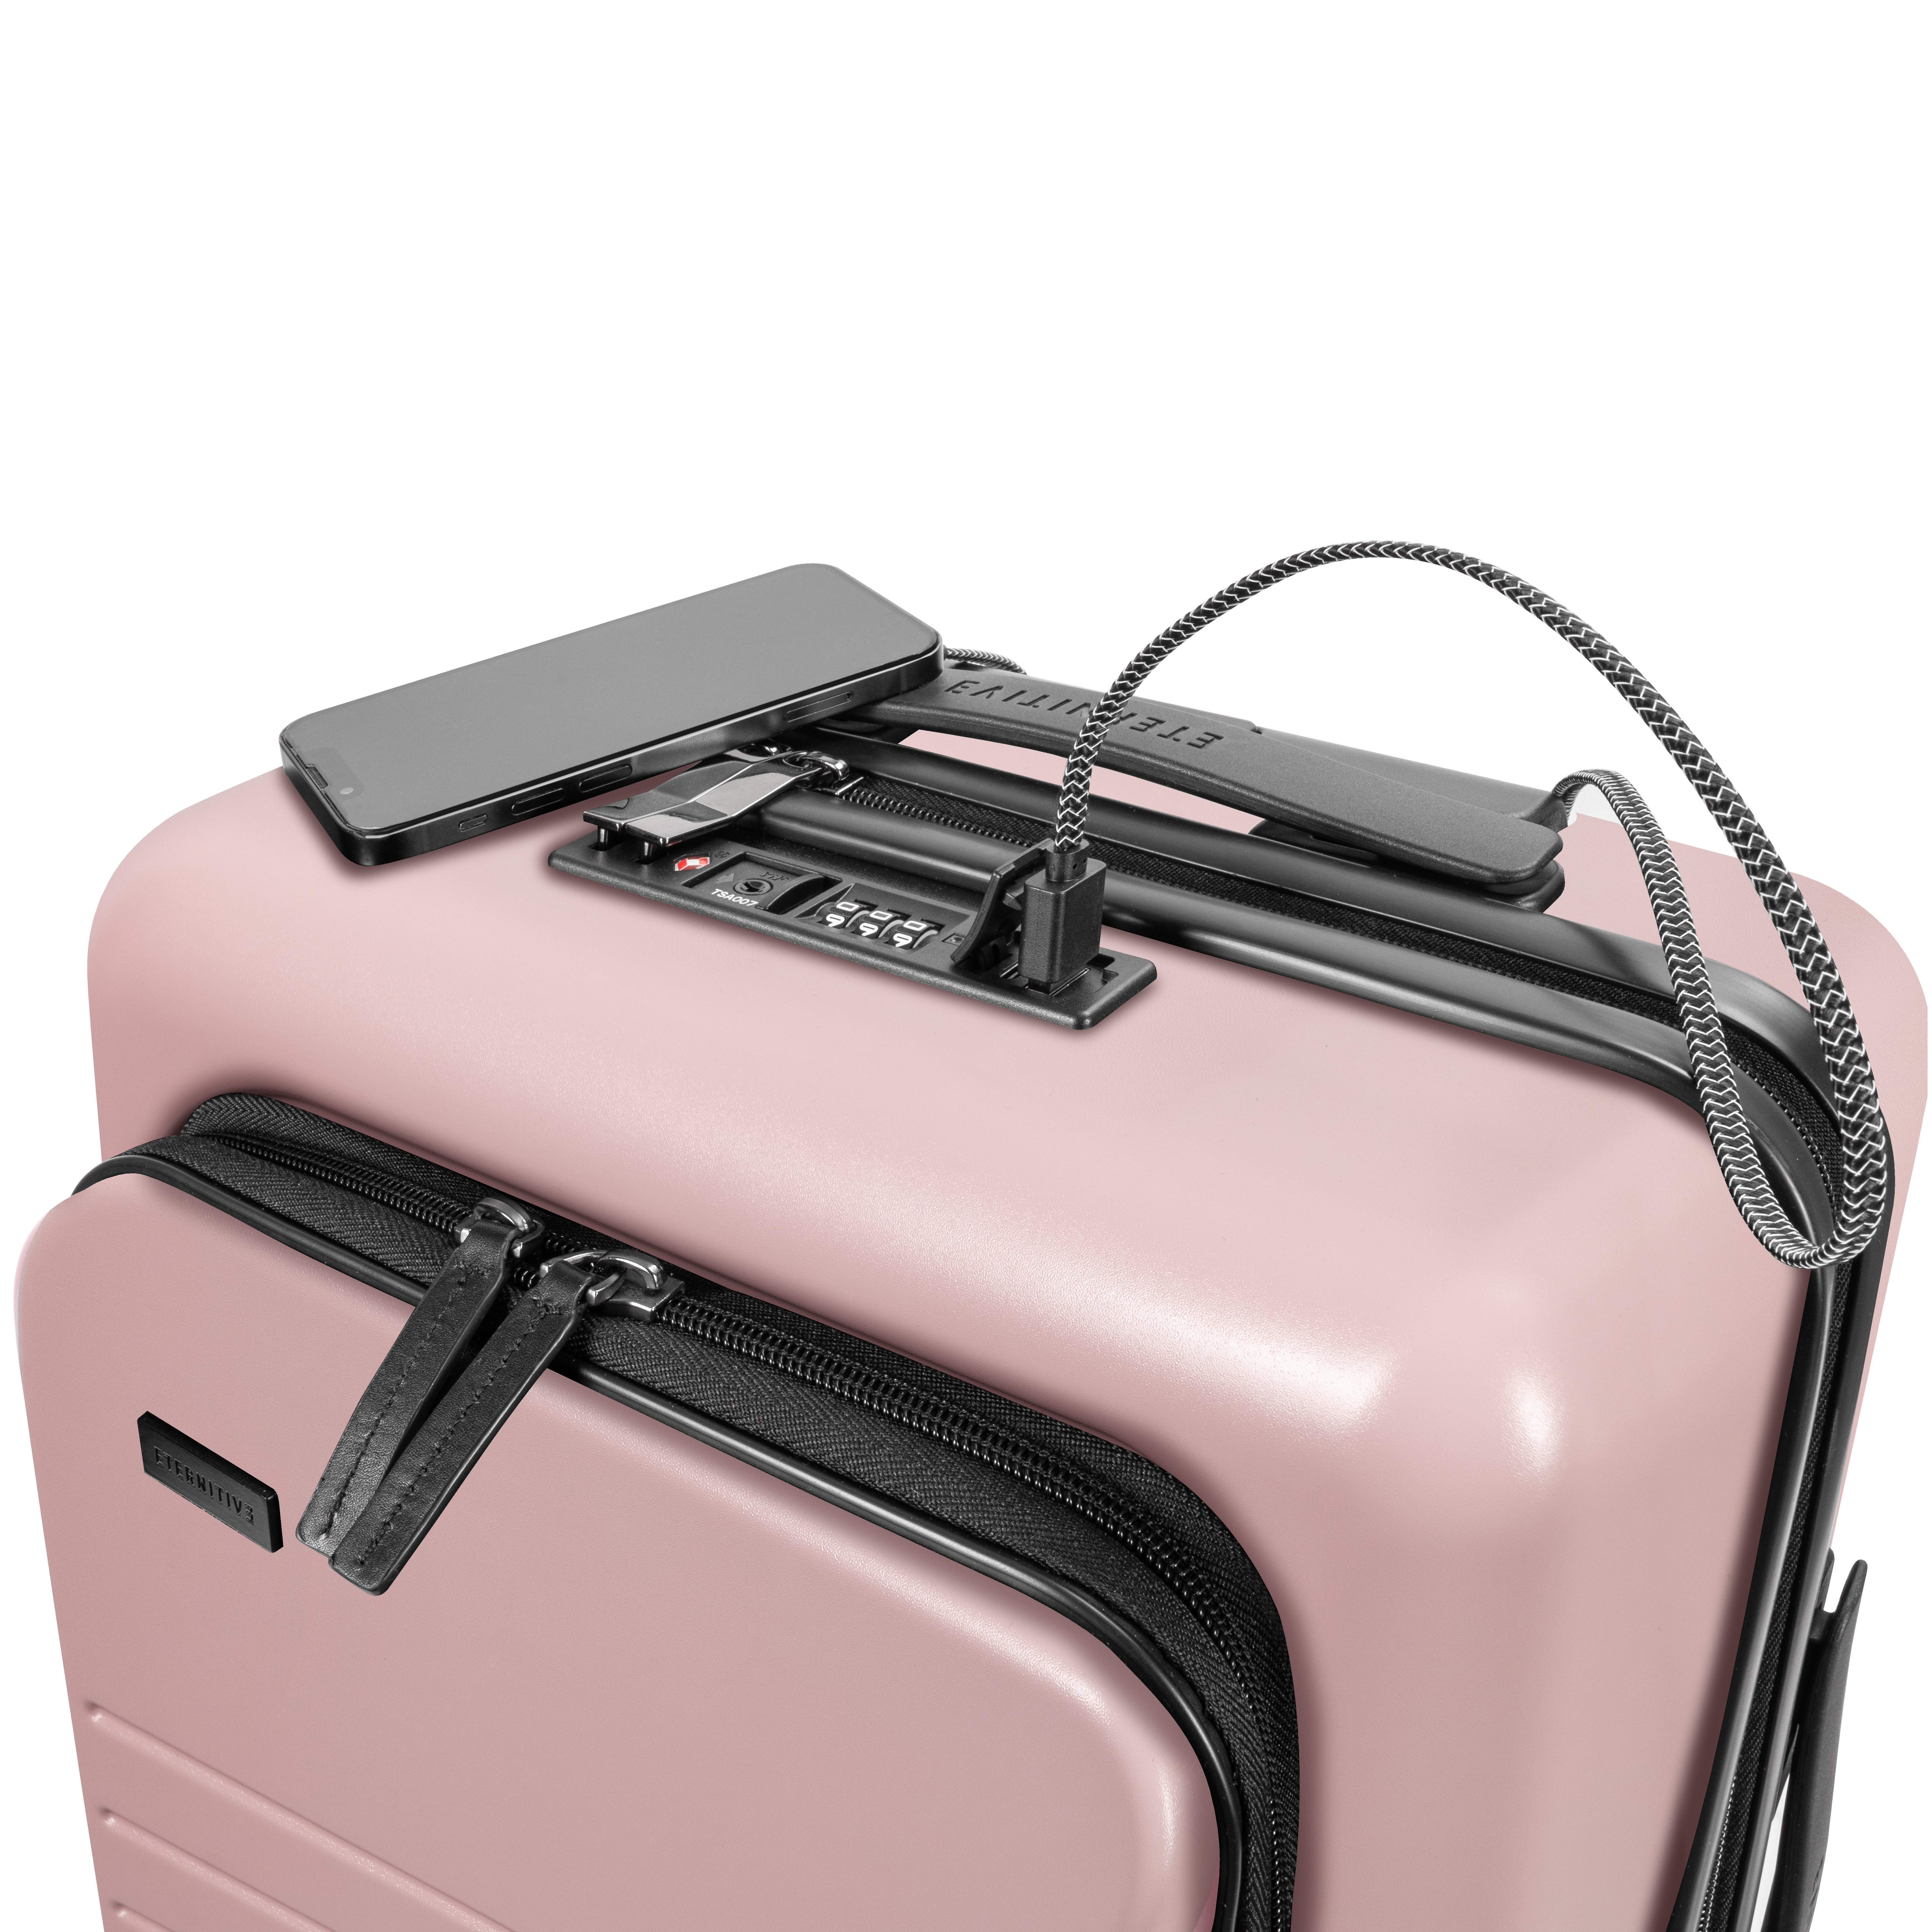 E3 set pink: \n Handgepäck plus + Mittelgroßer Koffer + Großer Koffer